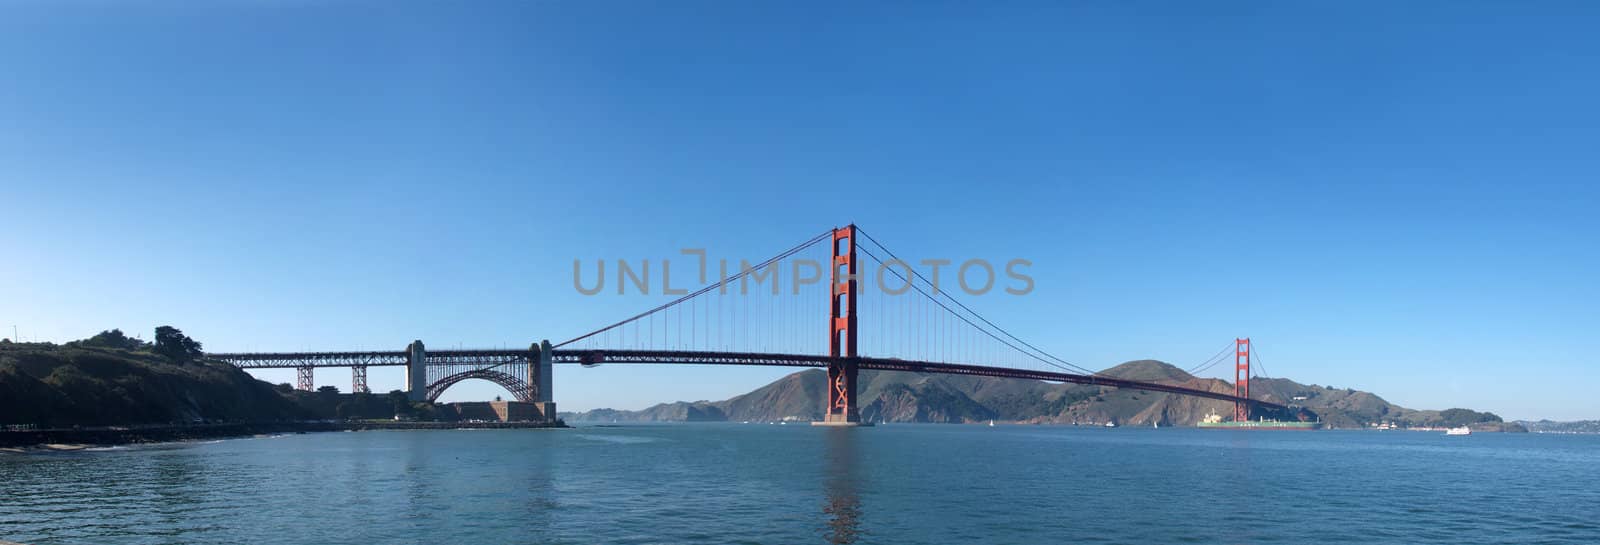 Panorama of Golden Gate Bridge in San Francisco by goldenangel